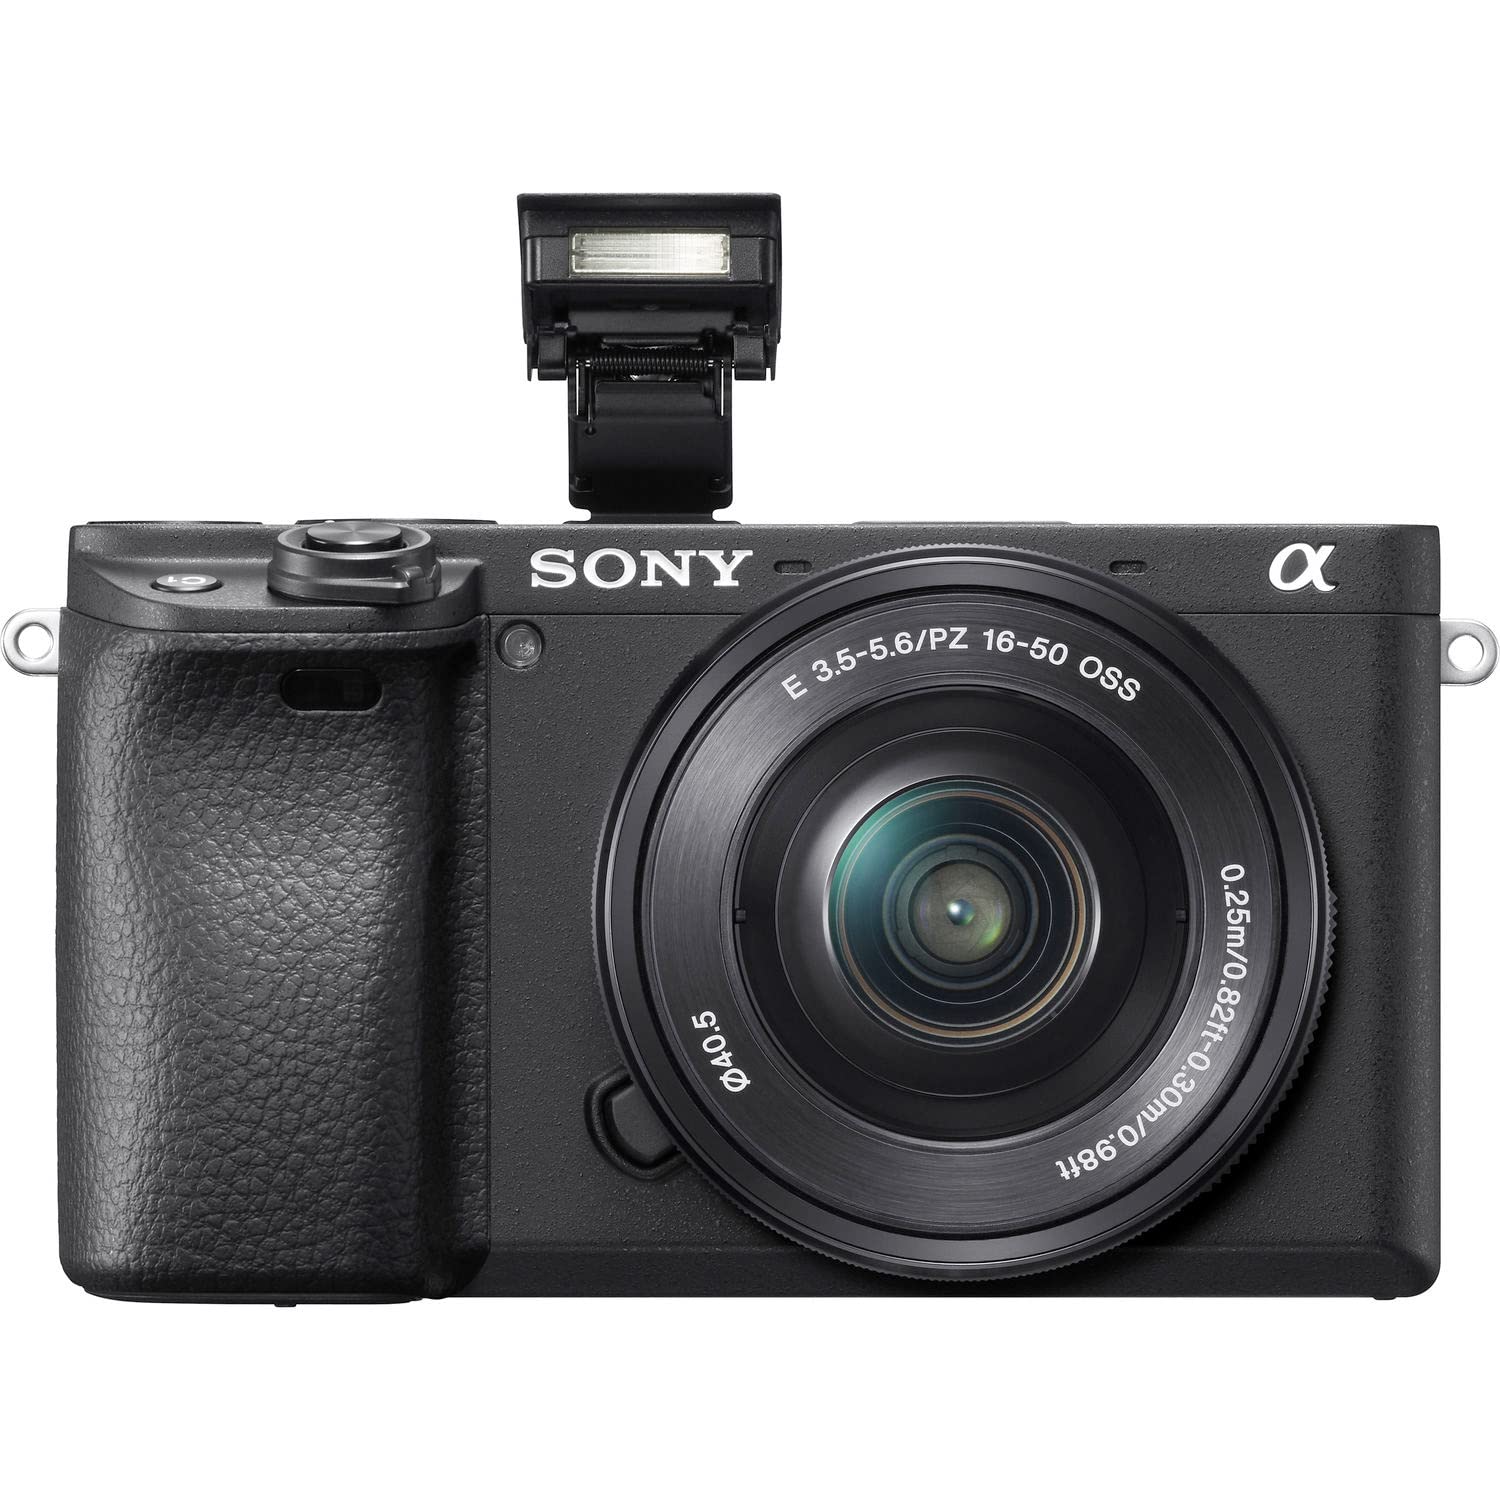 Sony a6400 Mirrorless Camera w/E 18-135mm f/3.5-5.6 OSS Lens + 2X 64GB Memory + Case + Filters + Tripod & More (35pc Bundle)